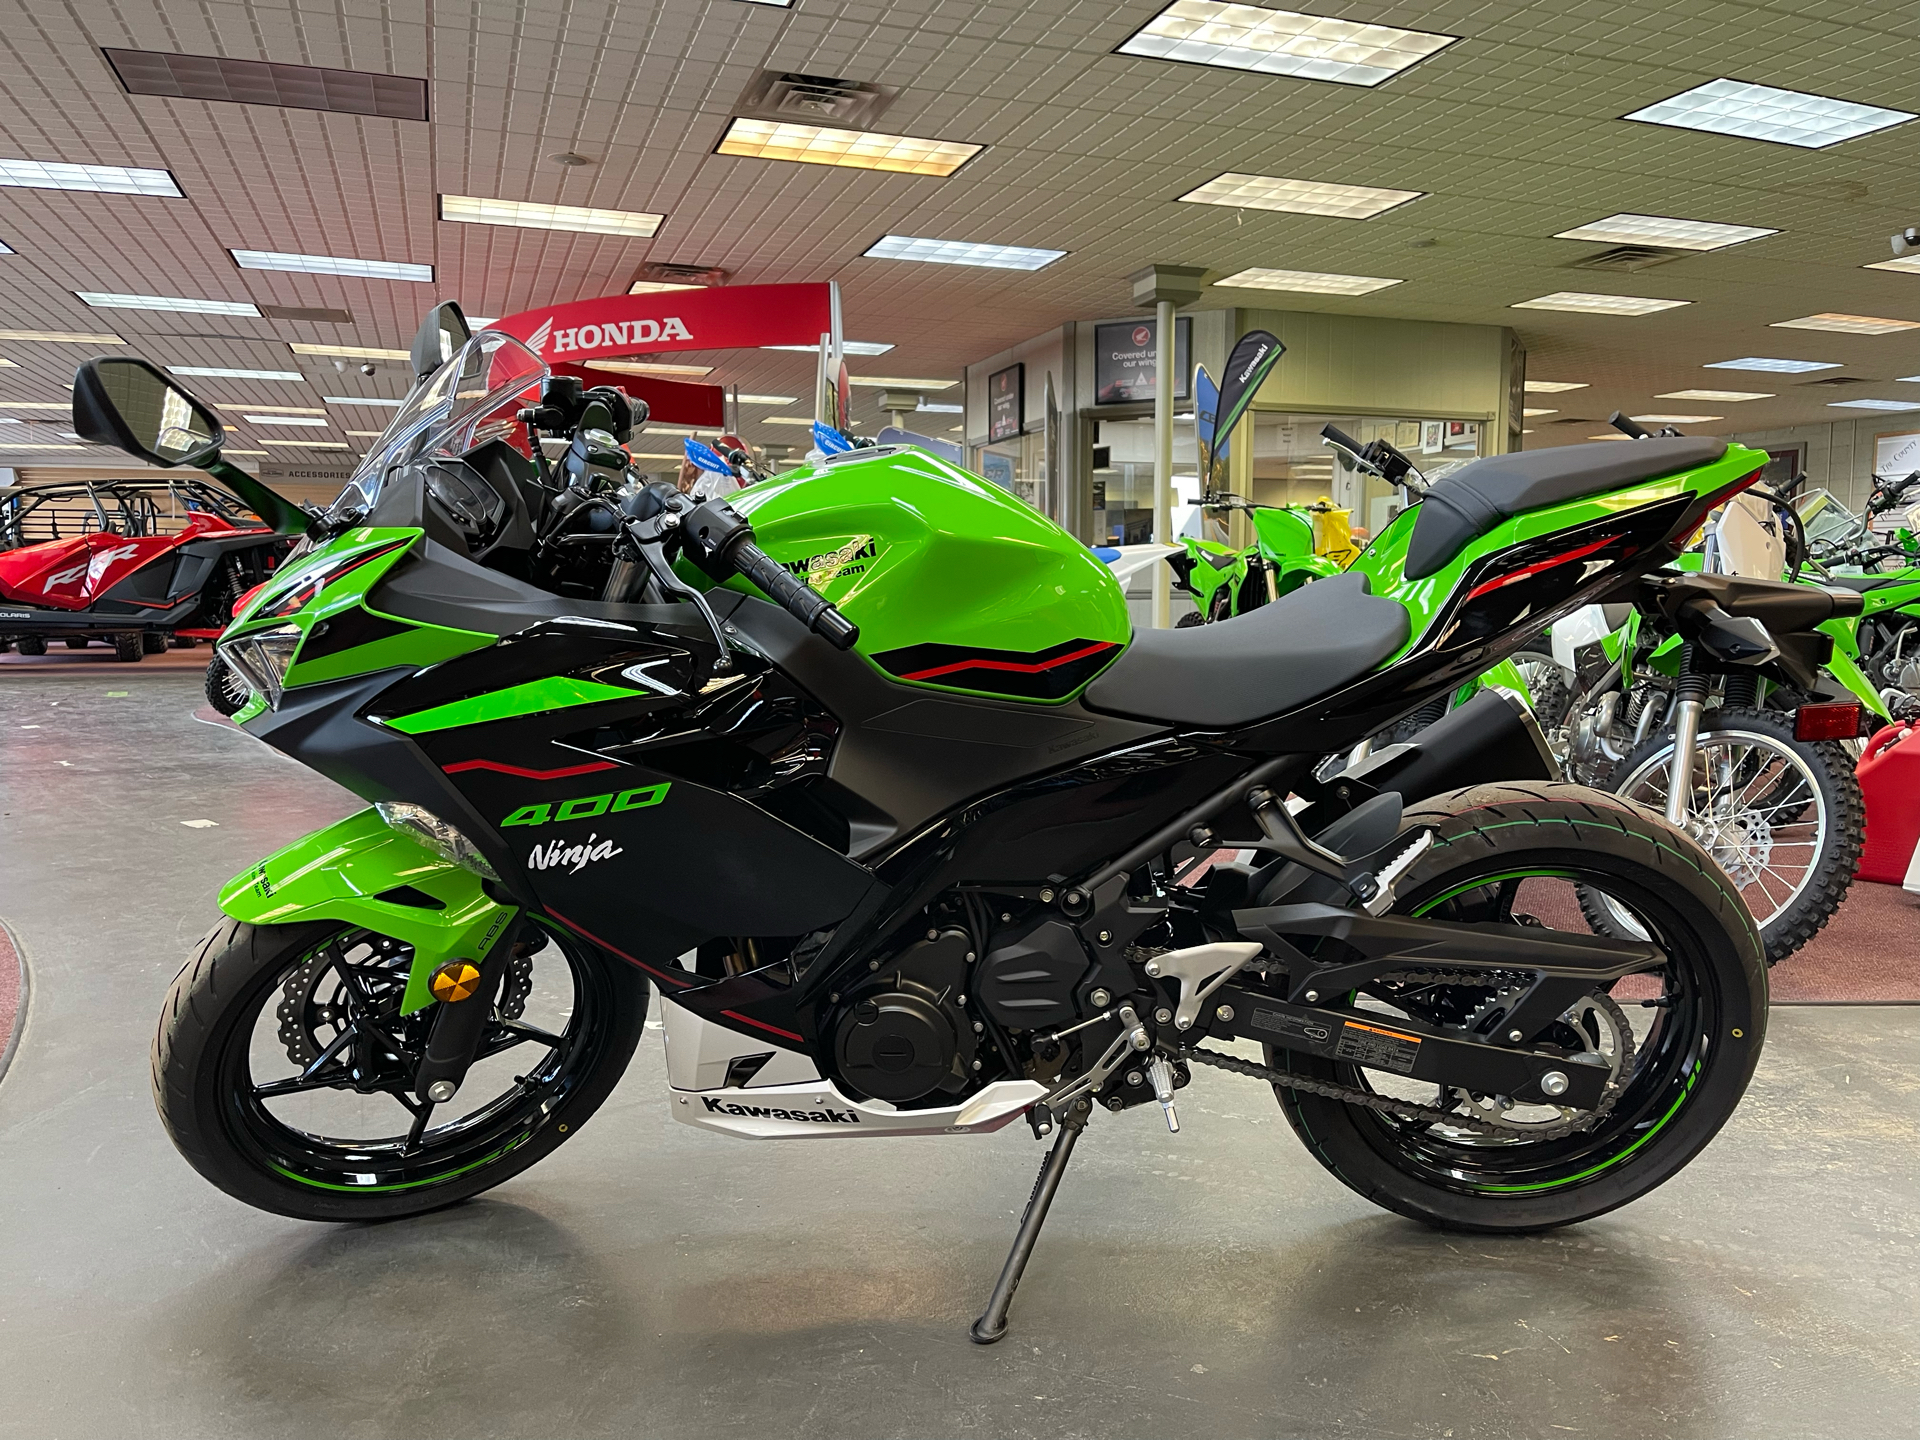 2022 Kawasaki Ninja 400 ABS KRT Edition in Petersburg, West Virginia - Photo 5